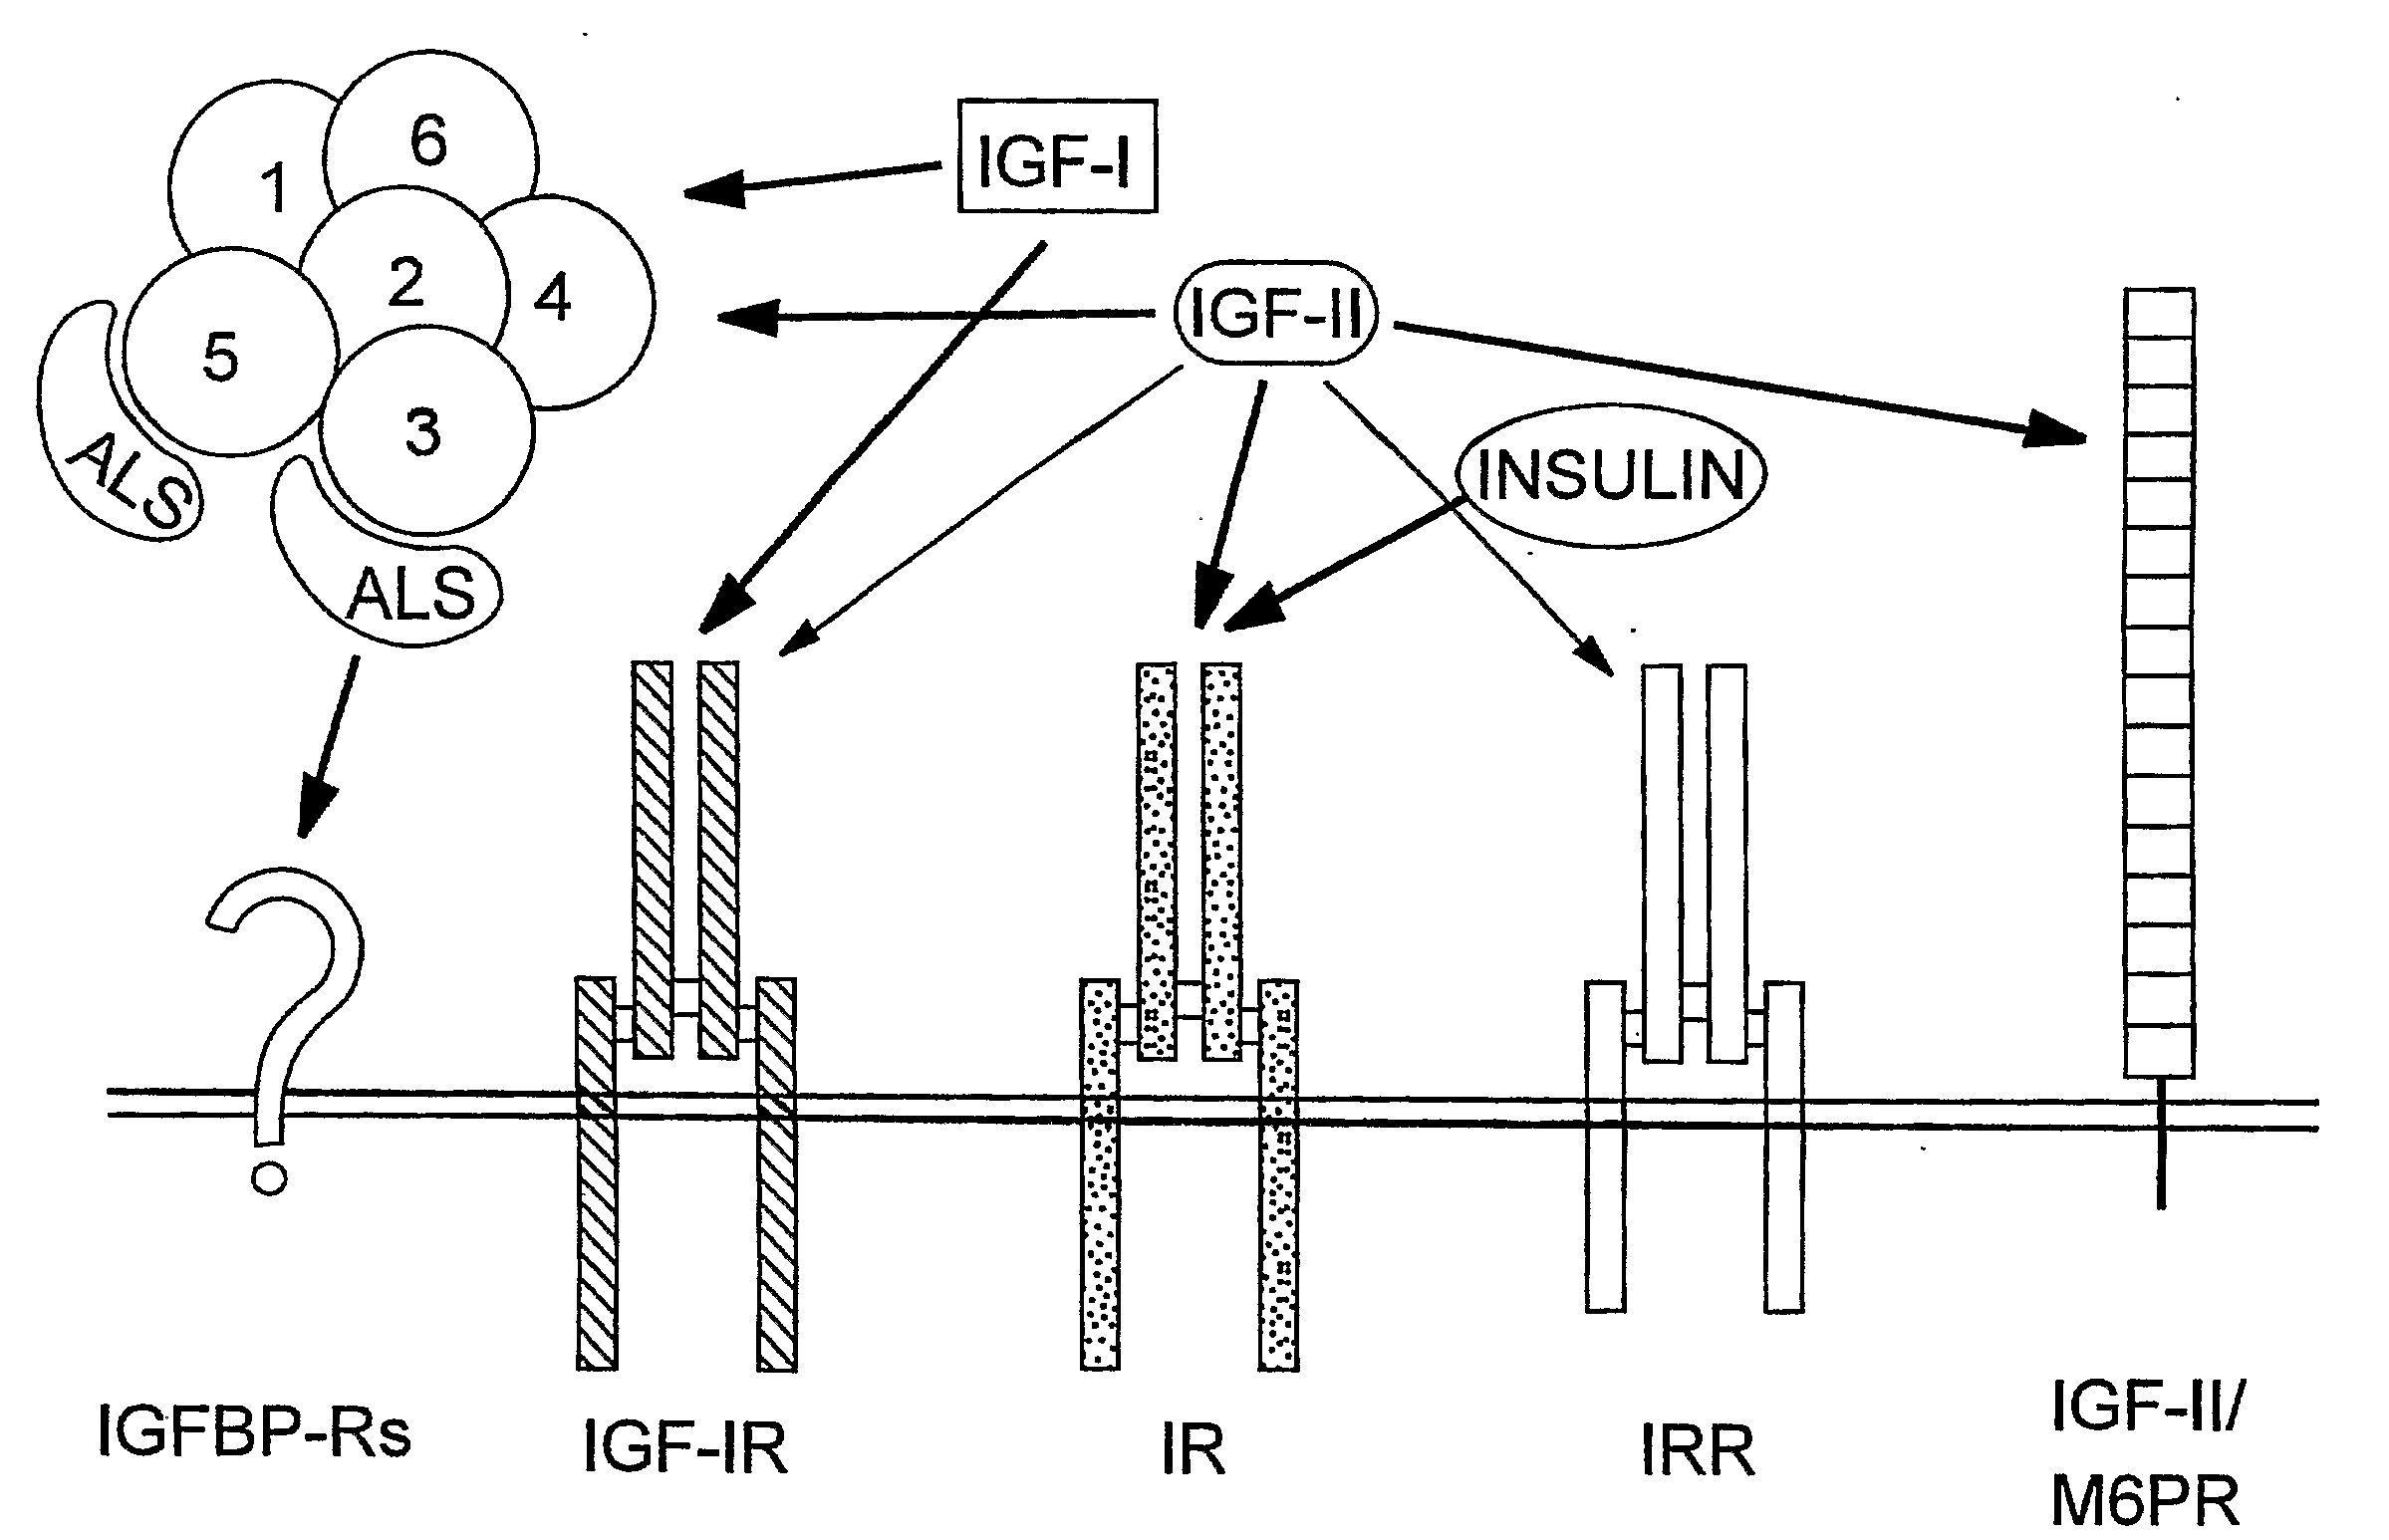 Human Monoclonal Antibodies that Specifically Bind Igf-II